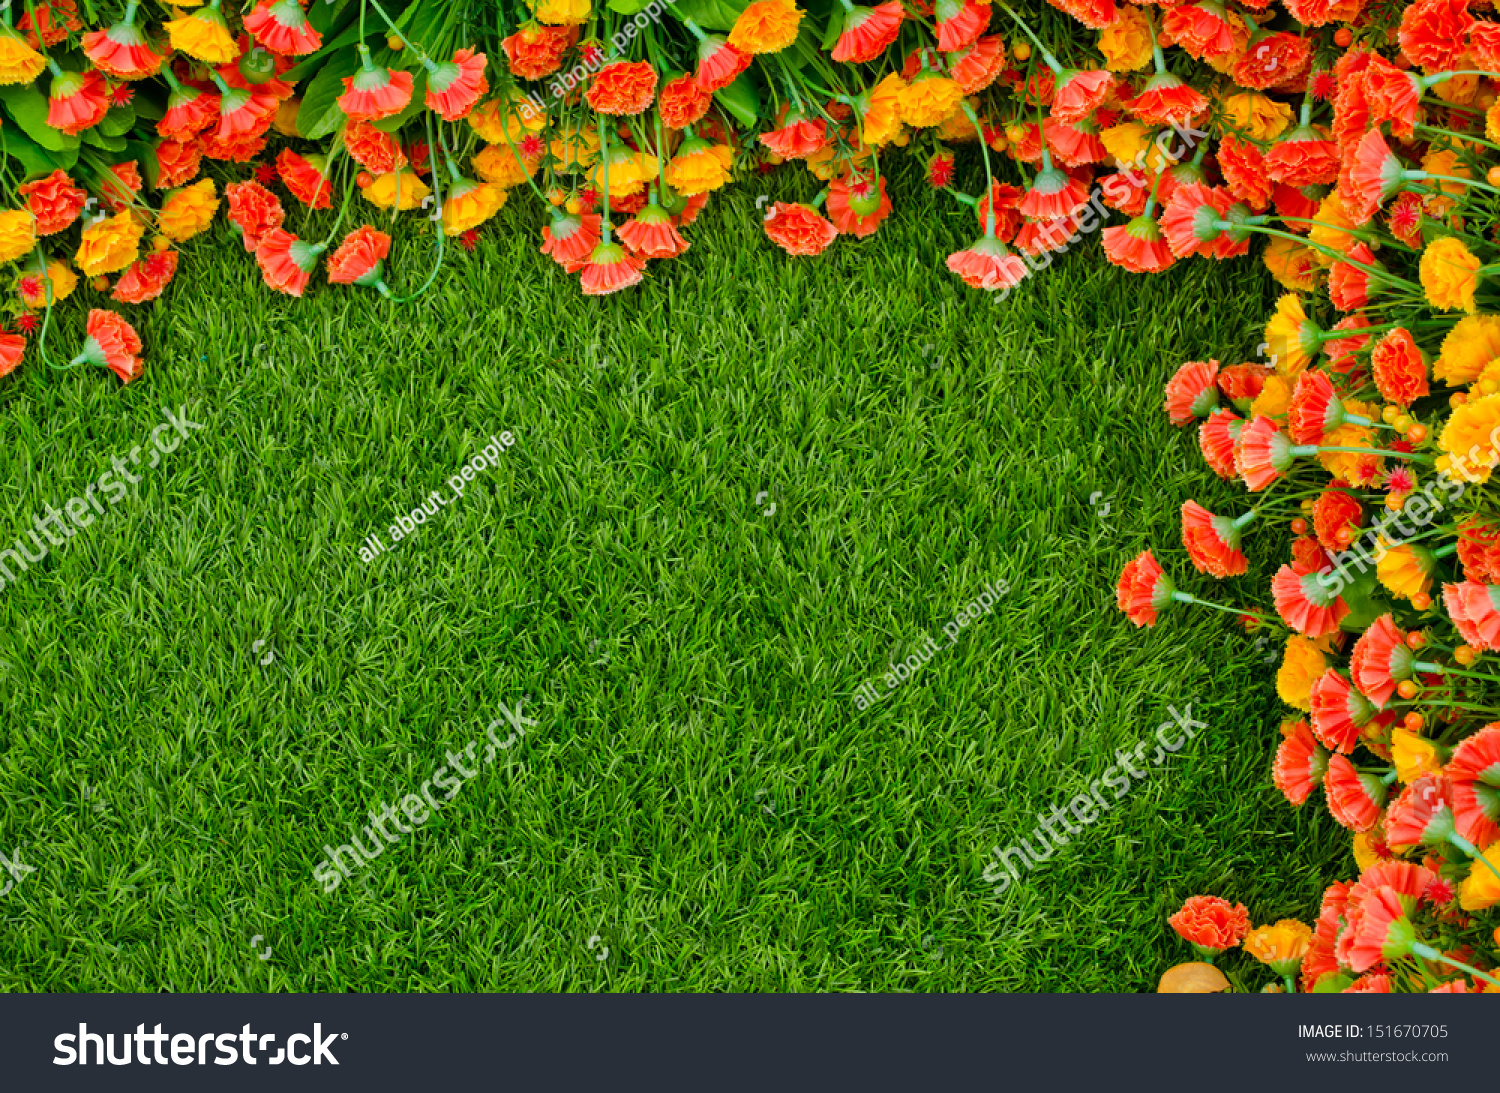 Artificial Grass Field Flowers Top View Stock Photo ...